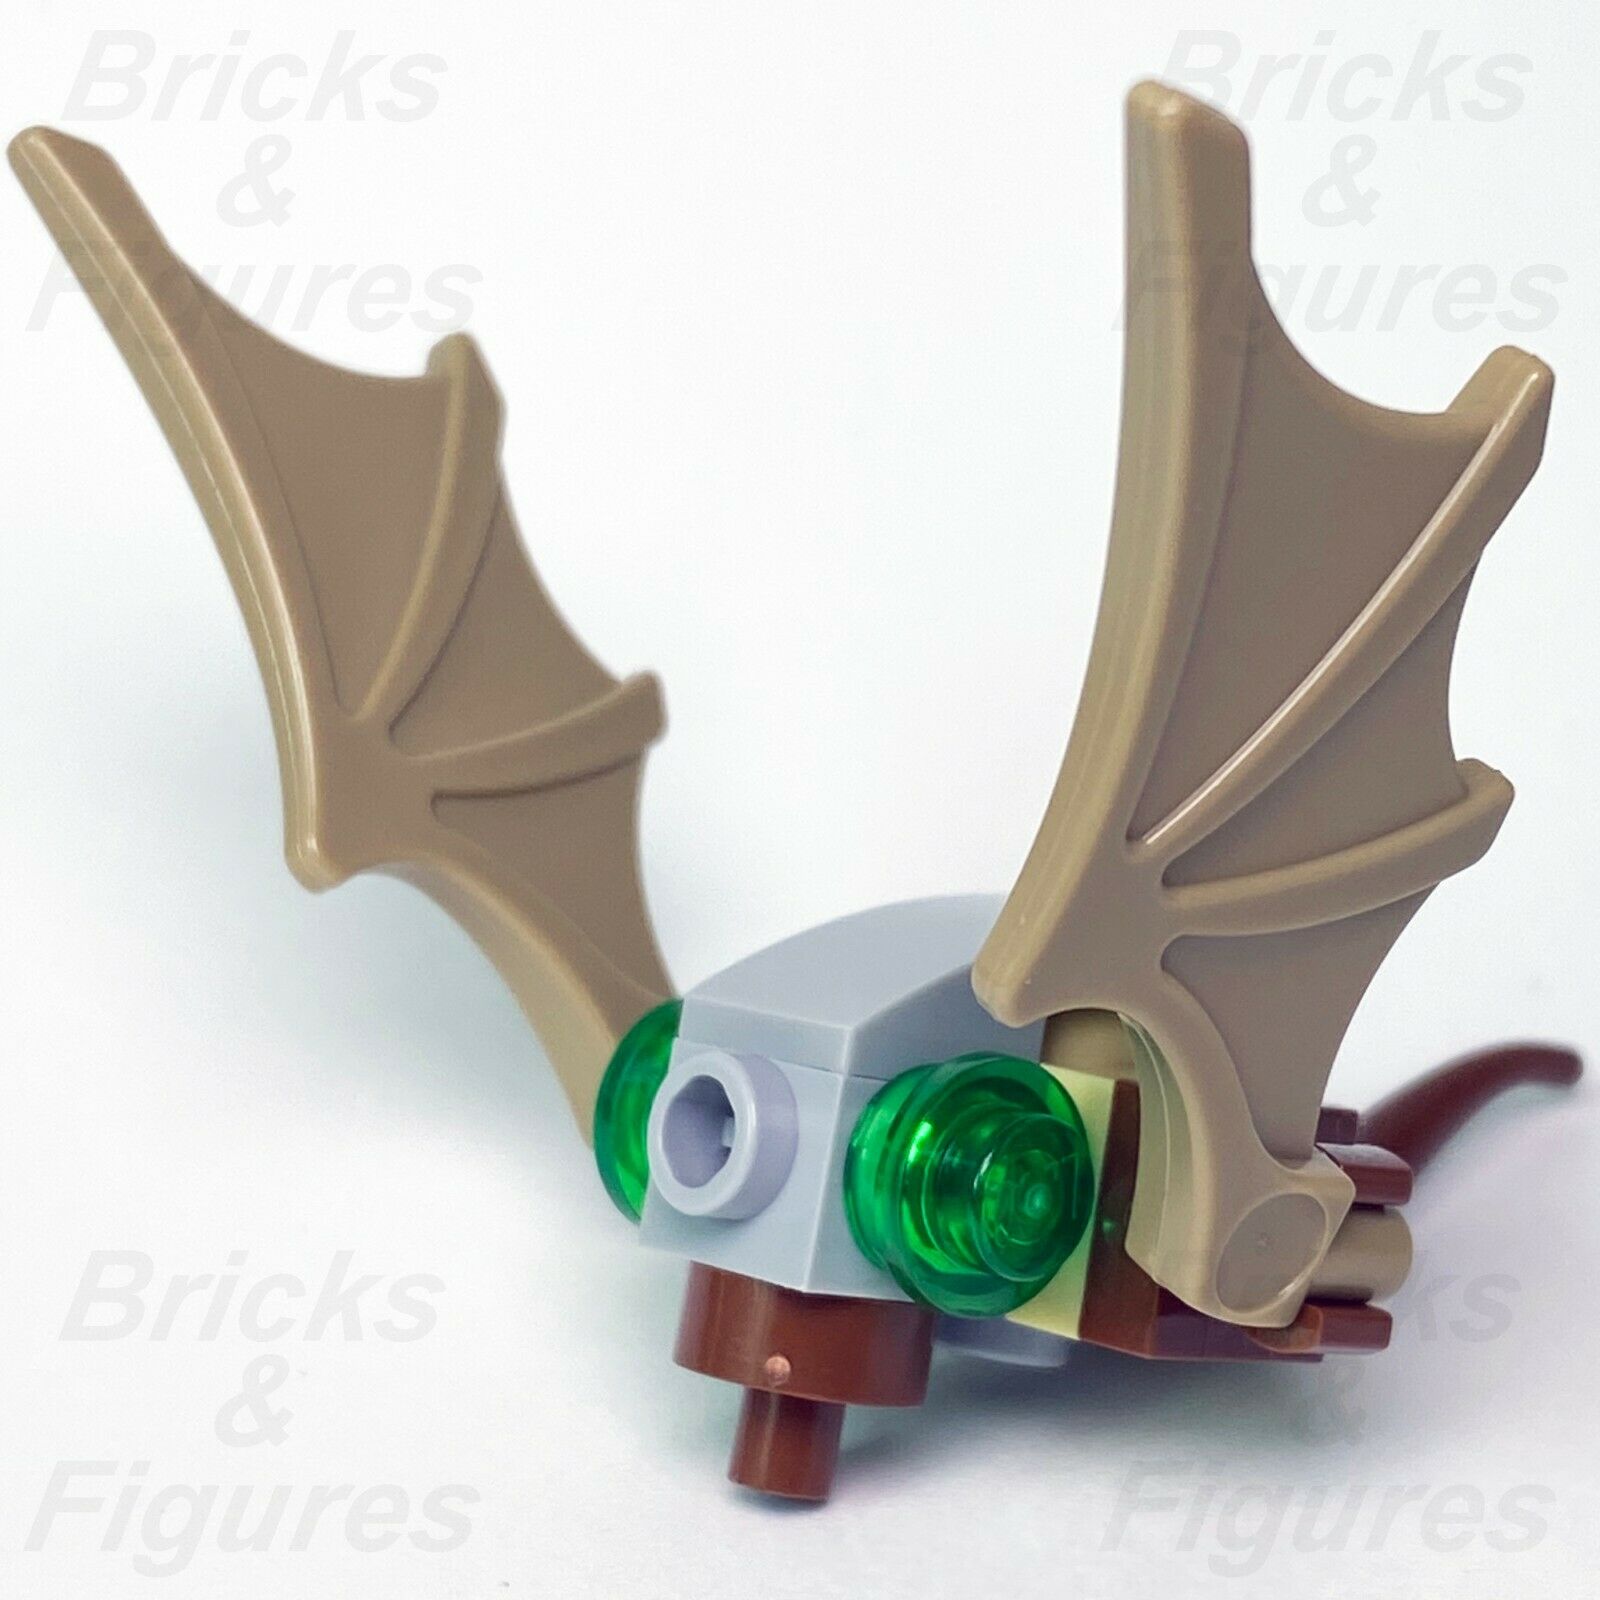 New Star Wars LEGO Mynock Bat-like Parasite Creature Minifigure 75245 75192 - Bricks & Figures